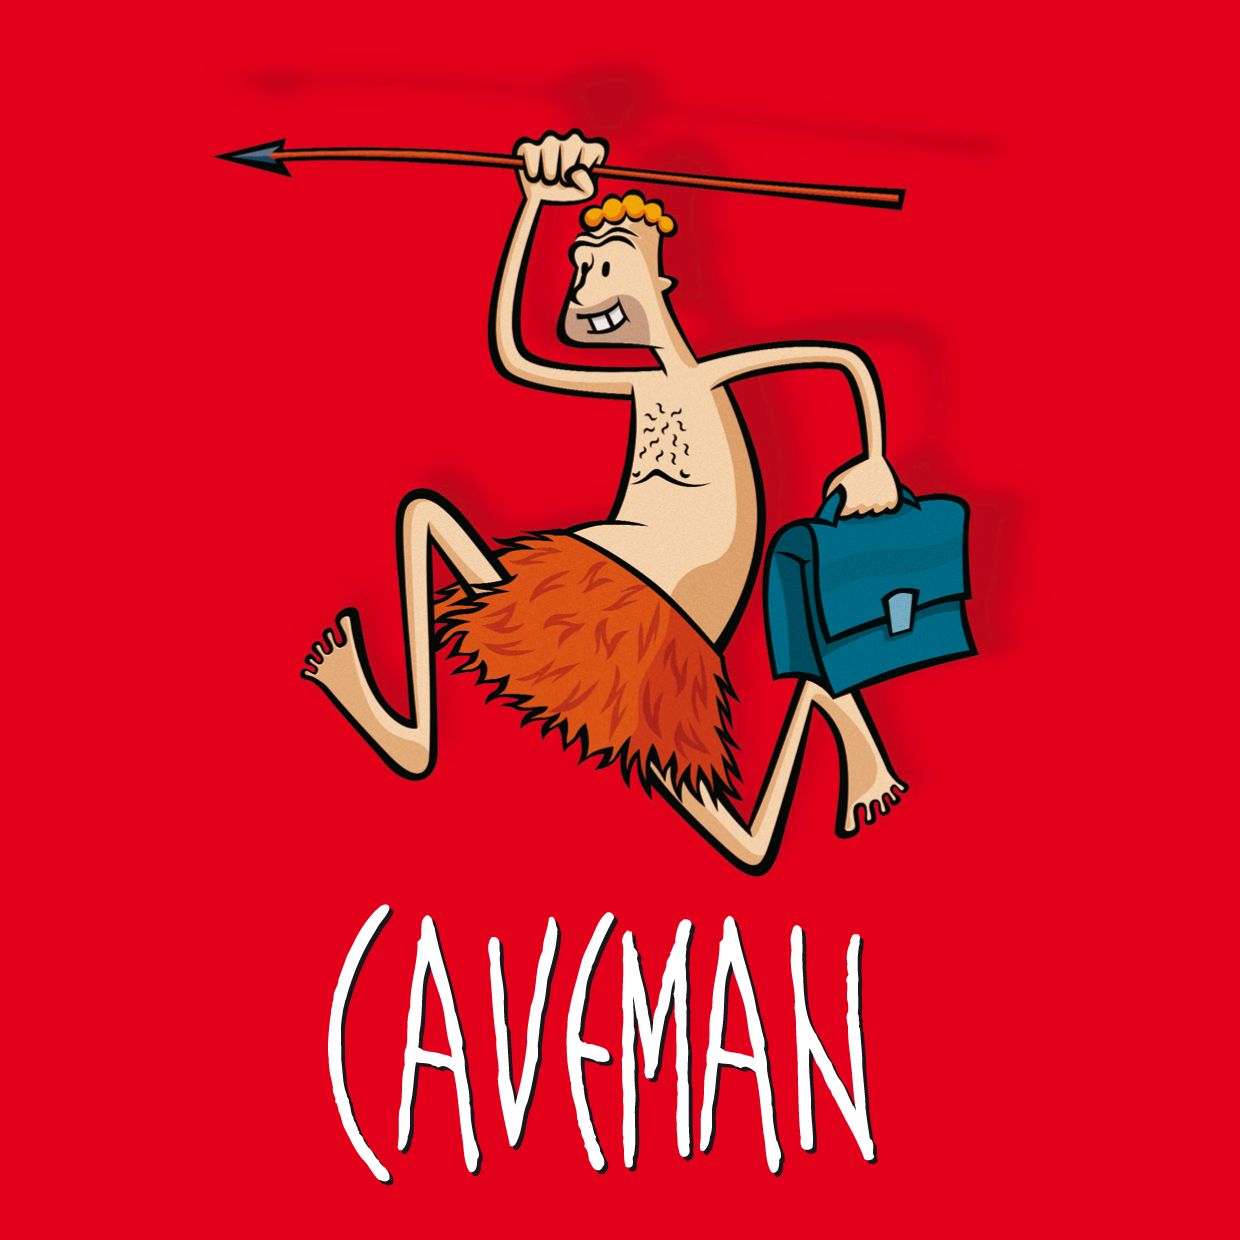 Caveman - Caveman